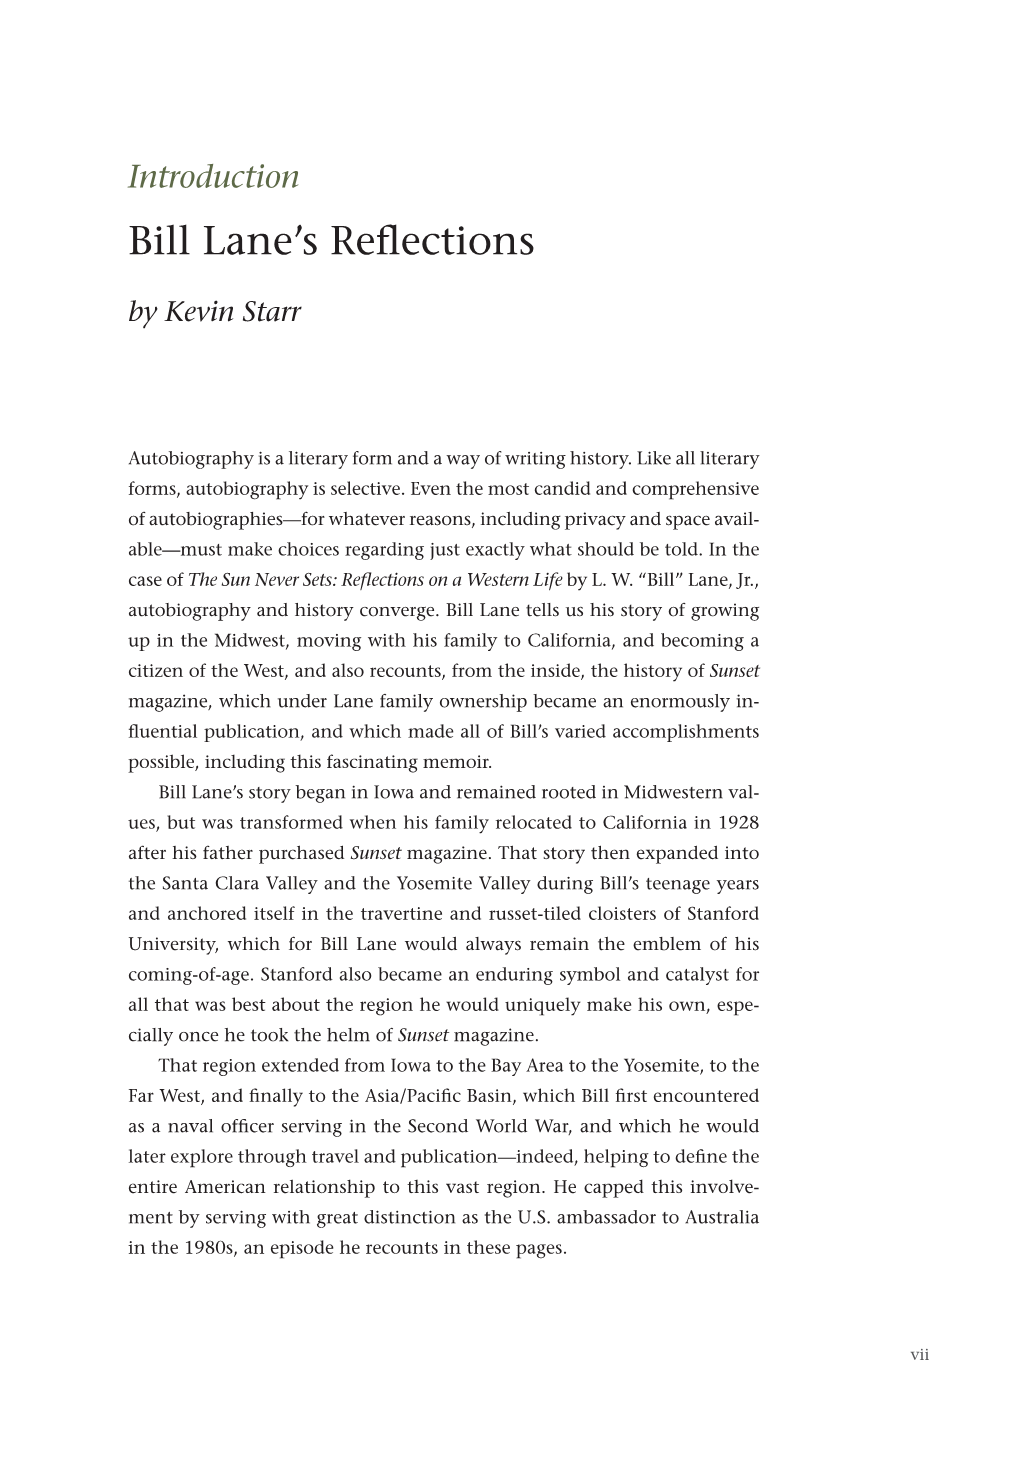 Bill Lane's Reflections